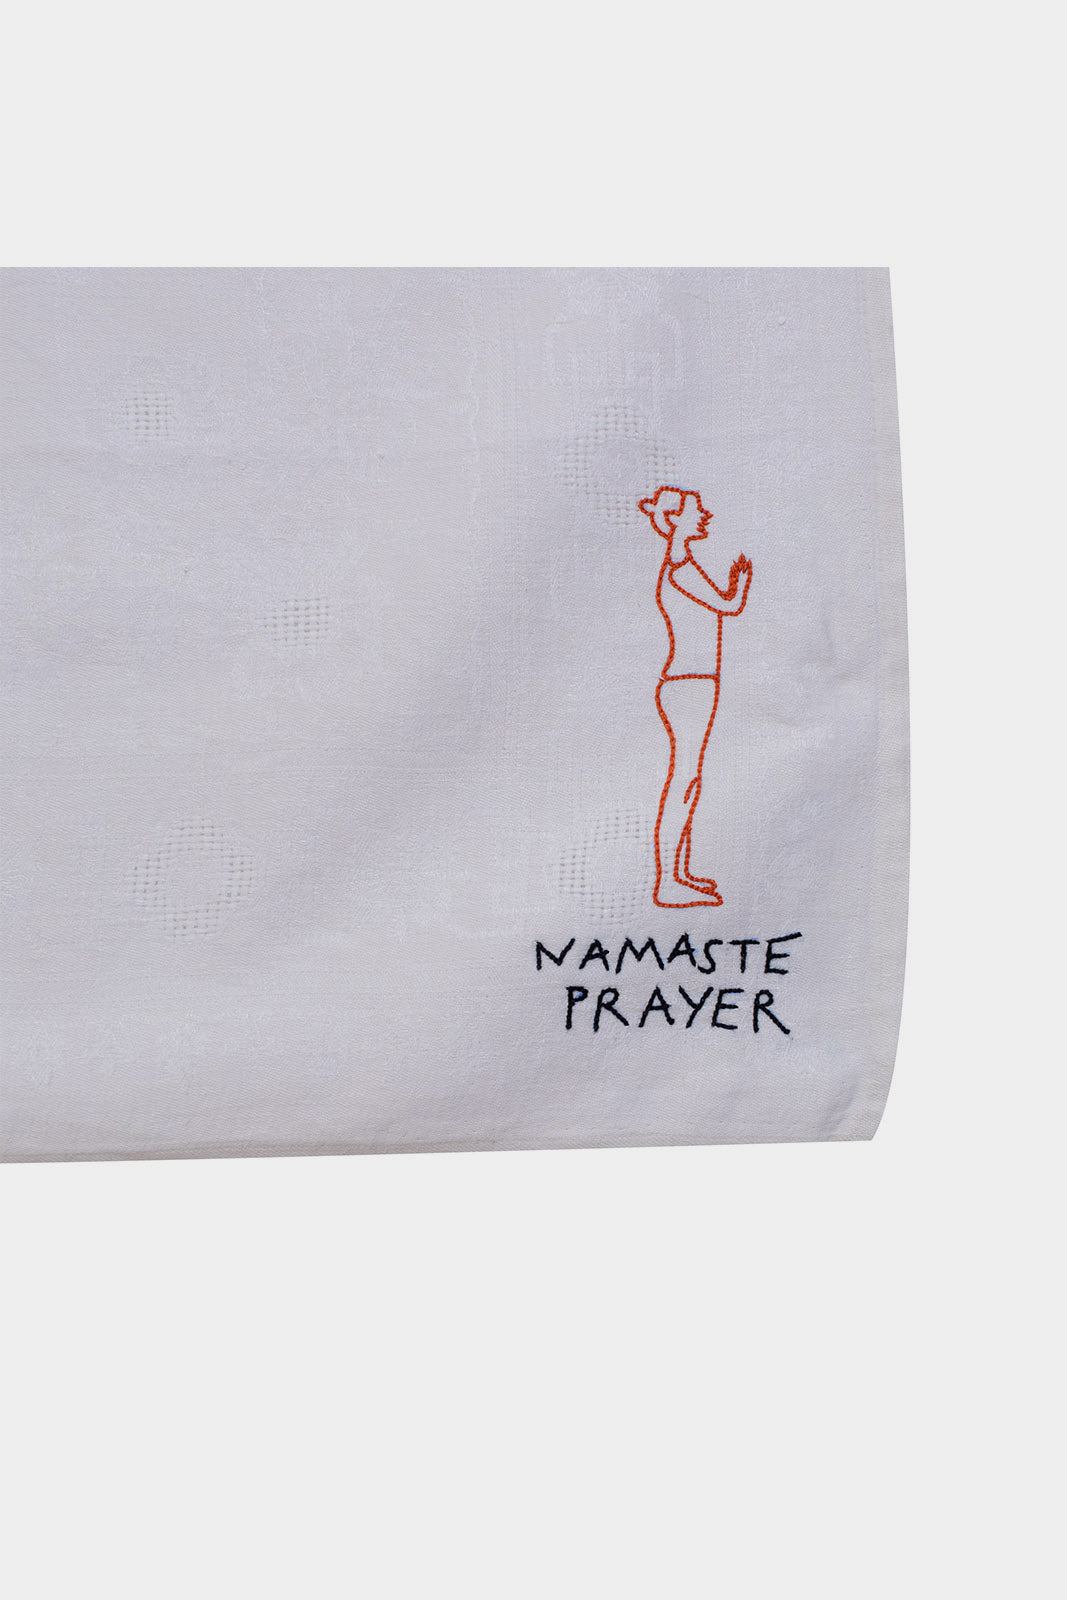 Namaste Prayer Embroidered Napkin